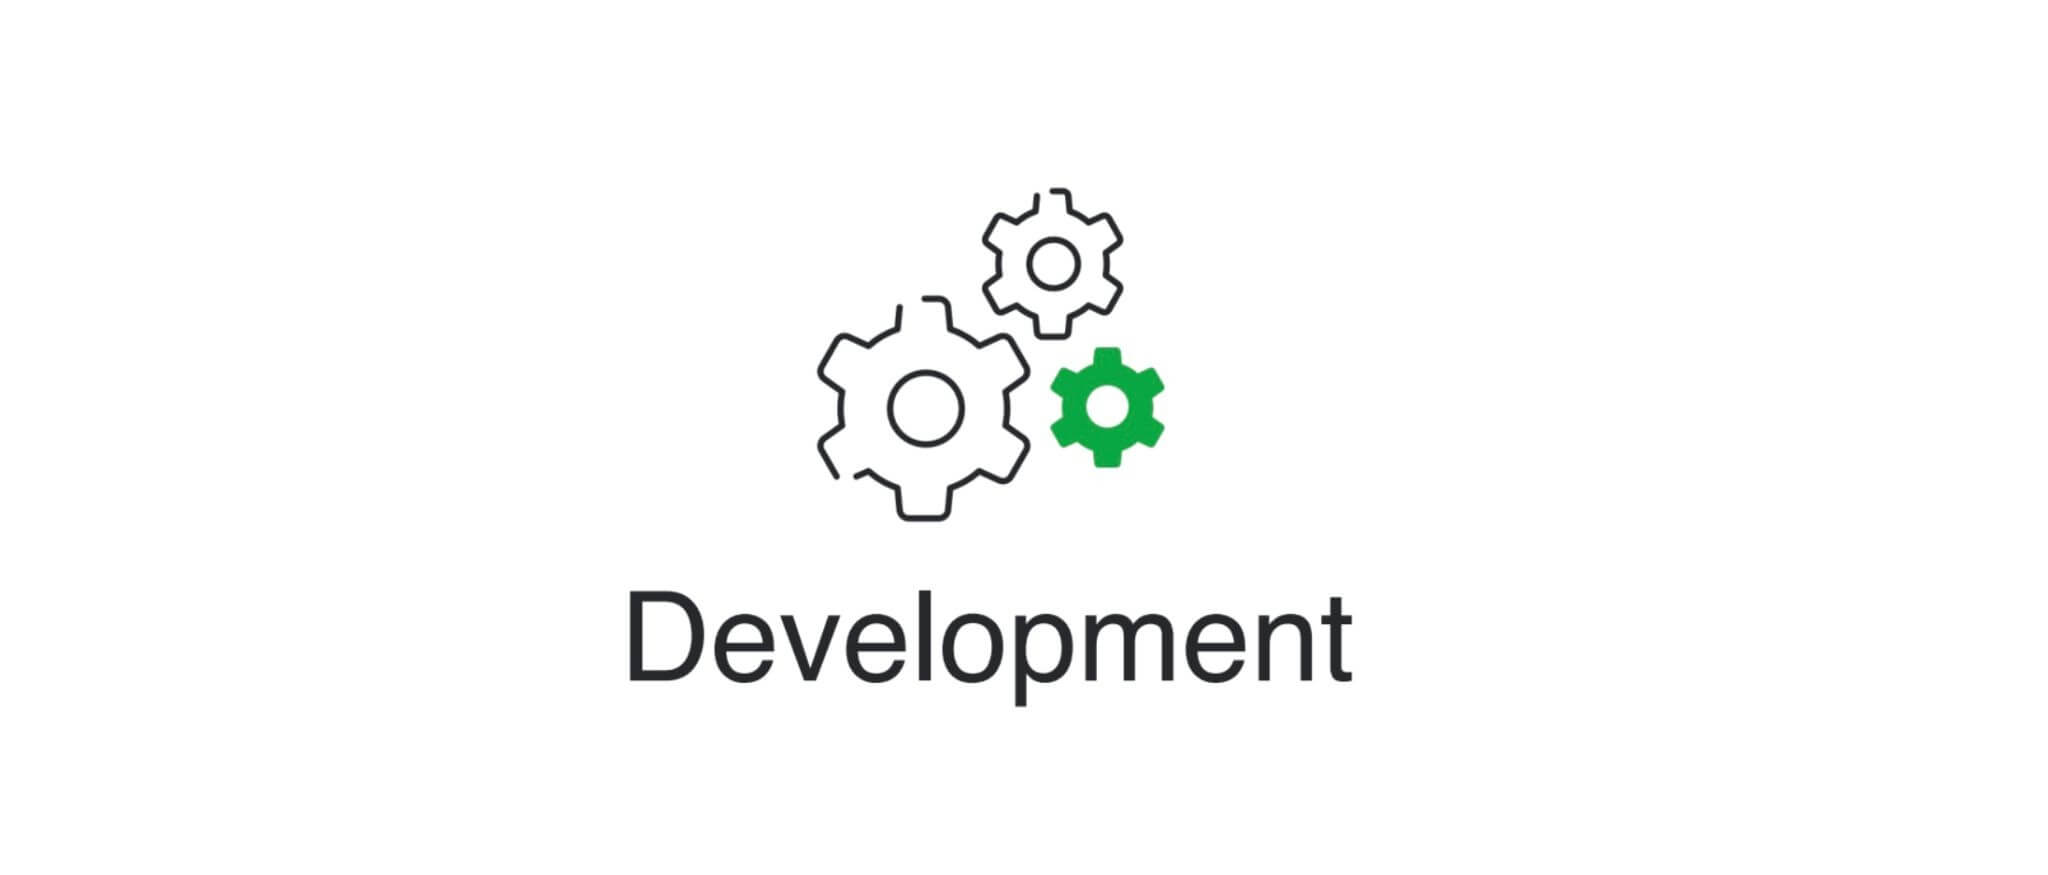 Product development cogs